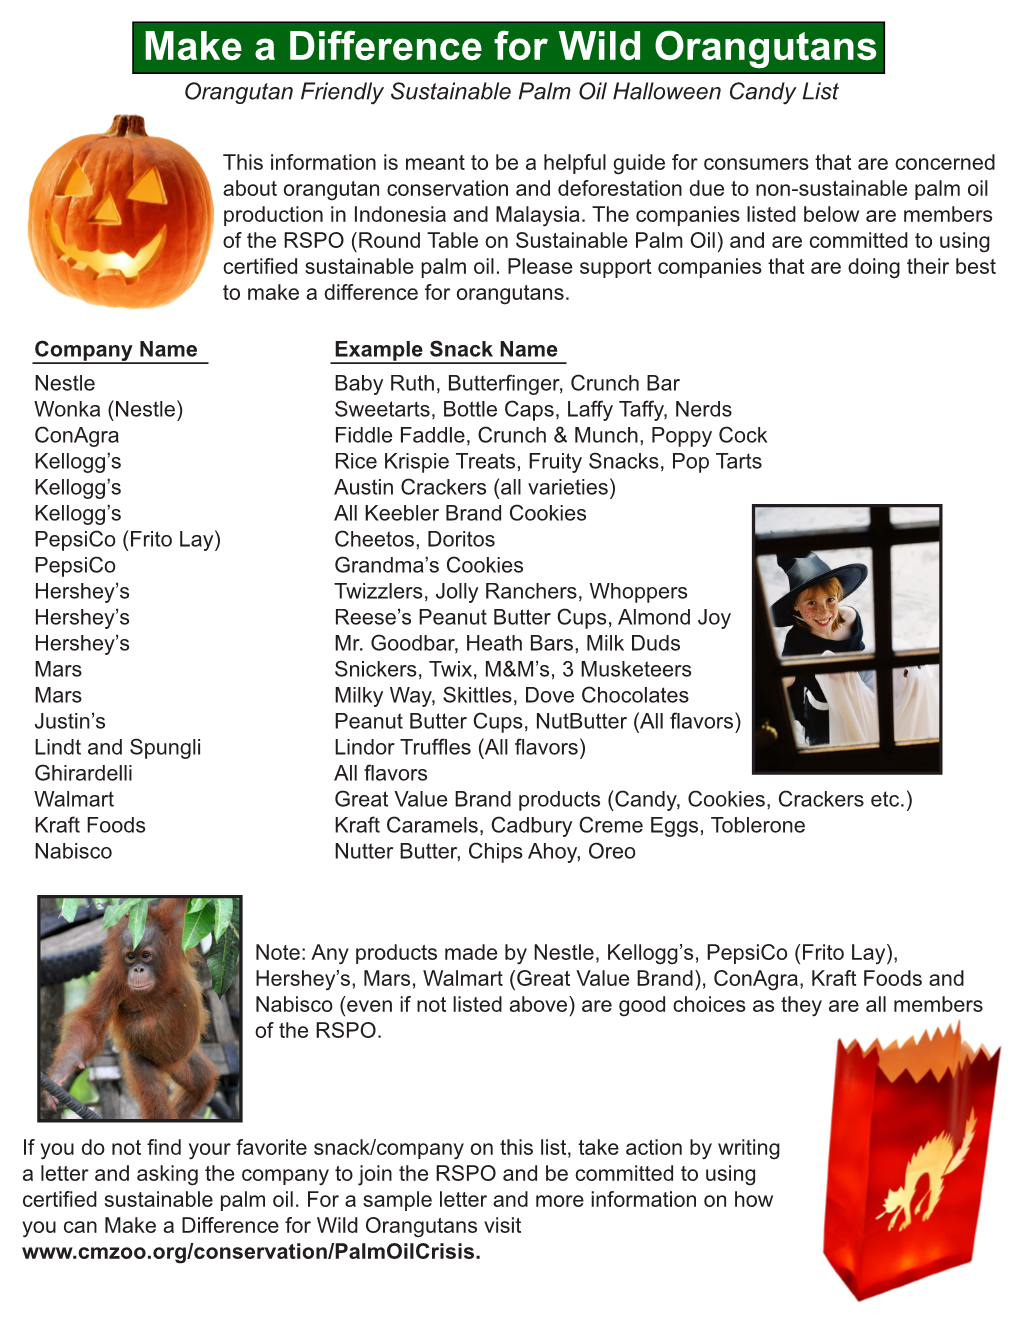 Orangutan Friendly Sustainable Palm Oil Halloween Candy List